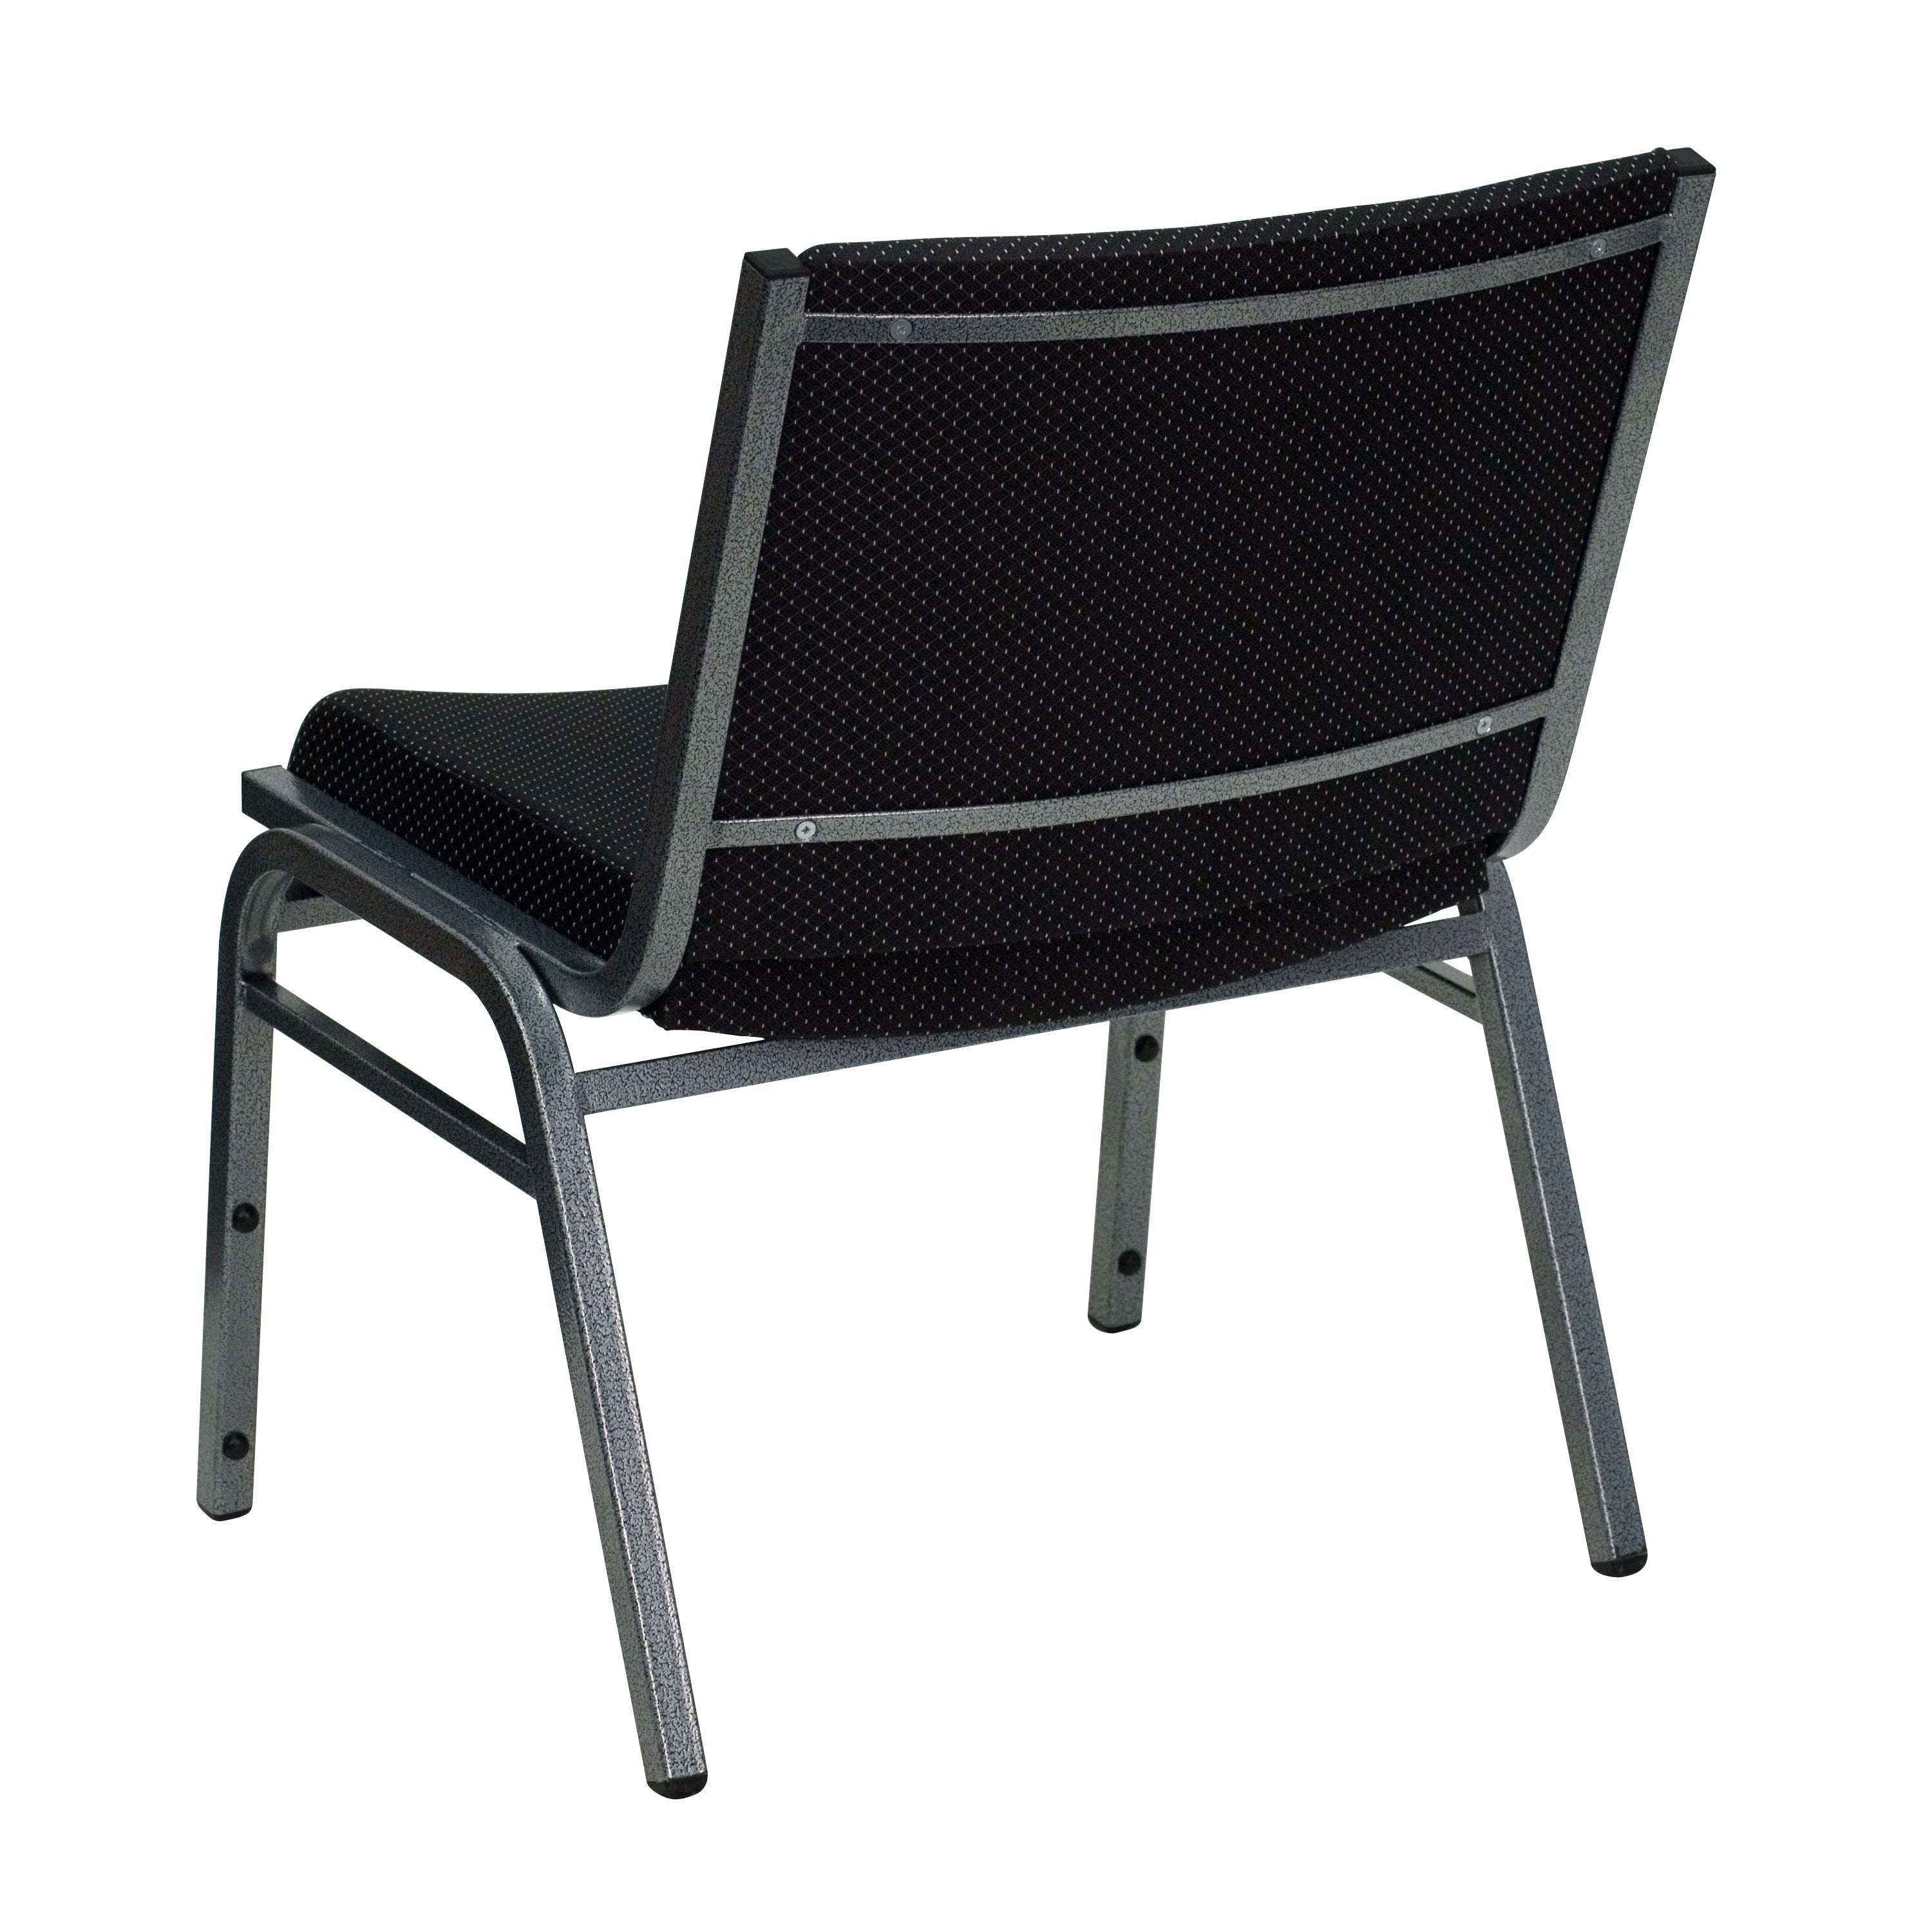 HERCULES Series Big & Tall 1000 lb. Rated Fabric Stack Chair-Big & Tall Office Chair-Flash Furniture-Wall2Wall Furnishings